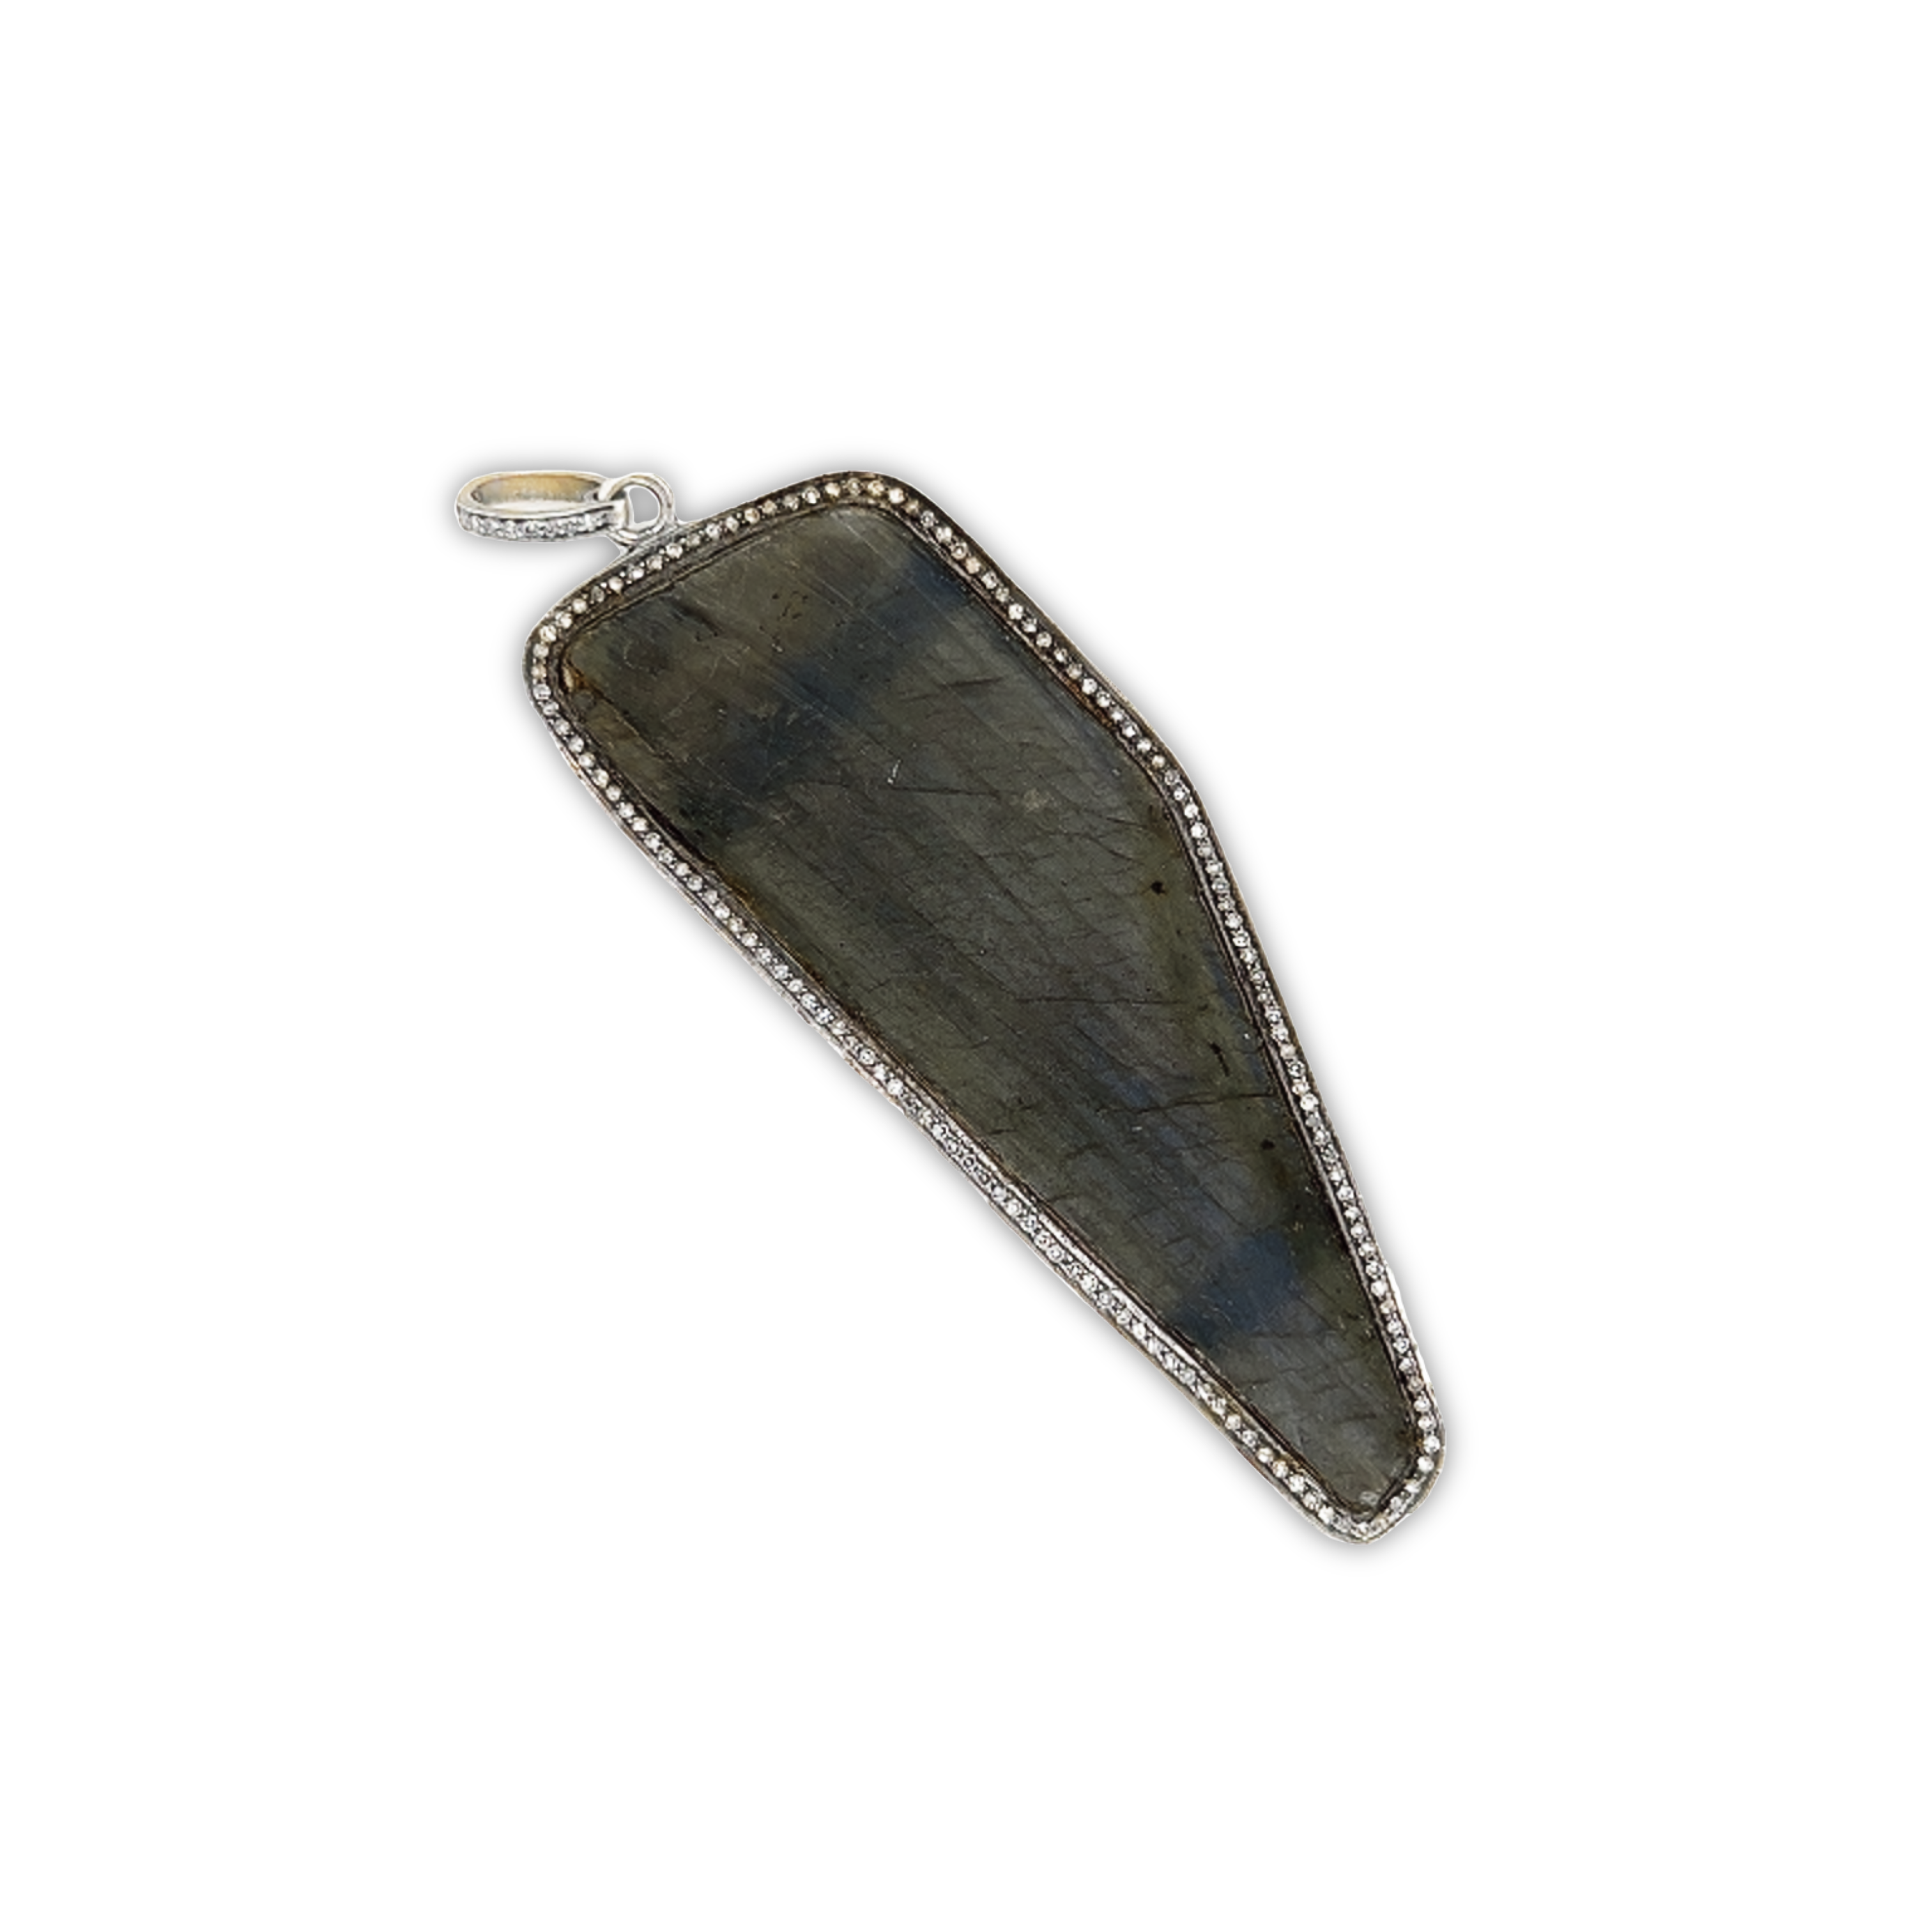 Featured image for “Diamond Bezeled Labradorite Pendant”